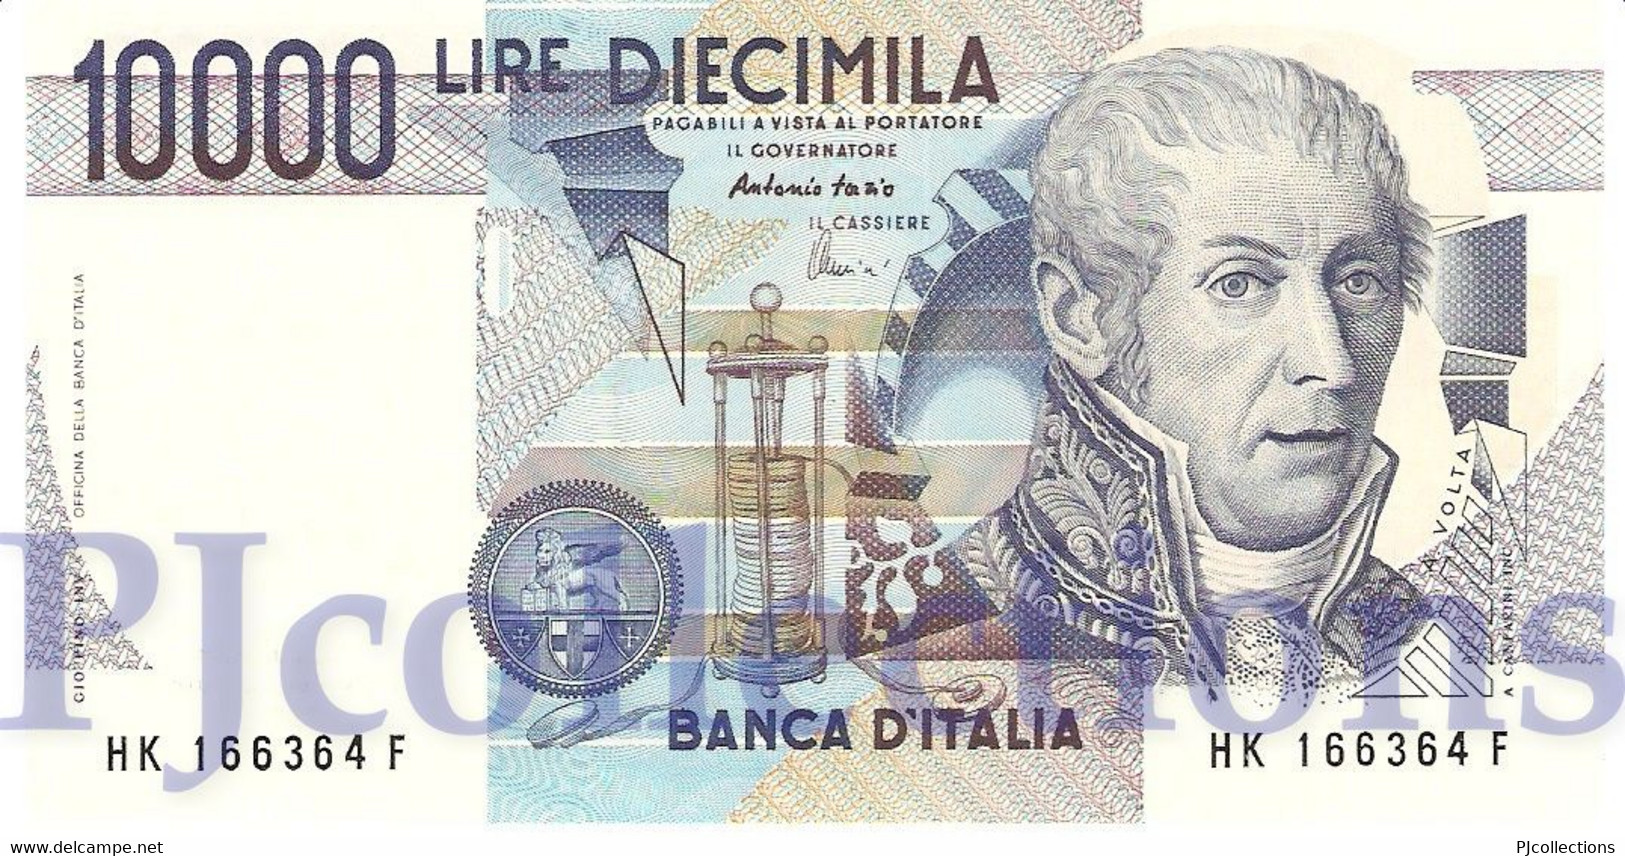 ITALIA - ITALY 10000 LIRE 1984 PICK 112d AU/UNC PREFIX "K" - 10000 Lire